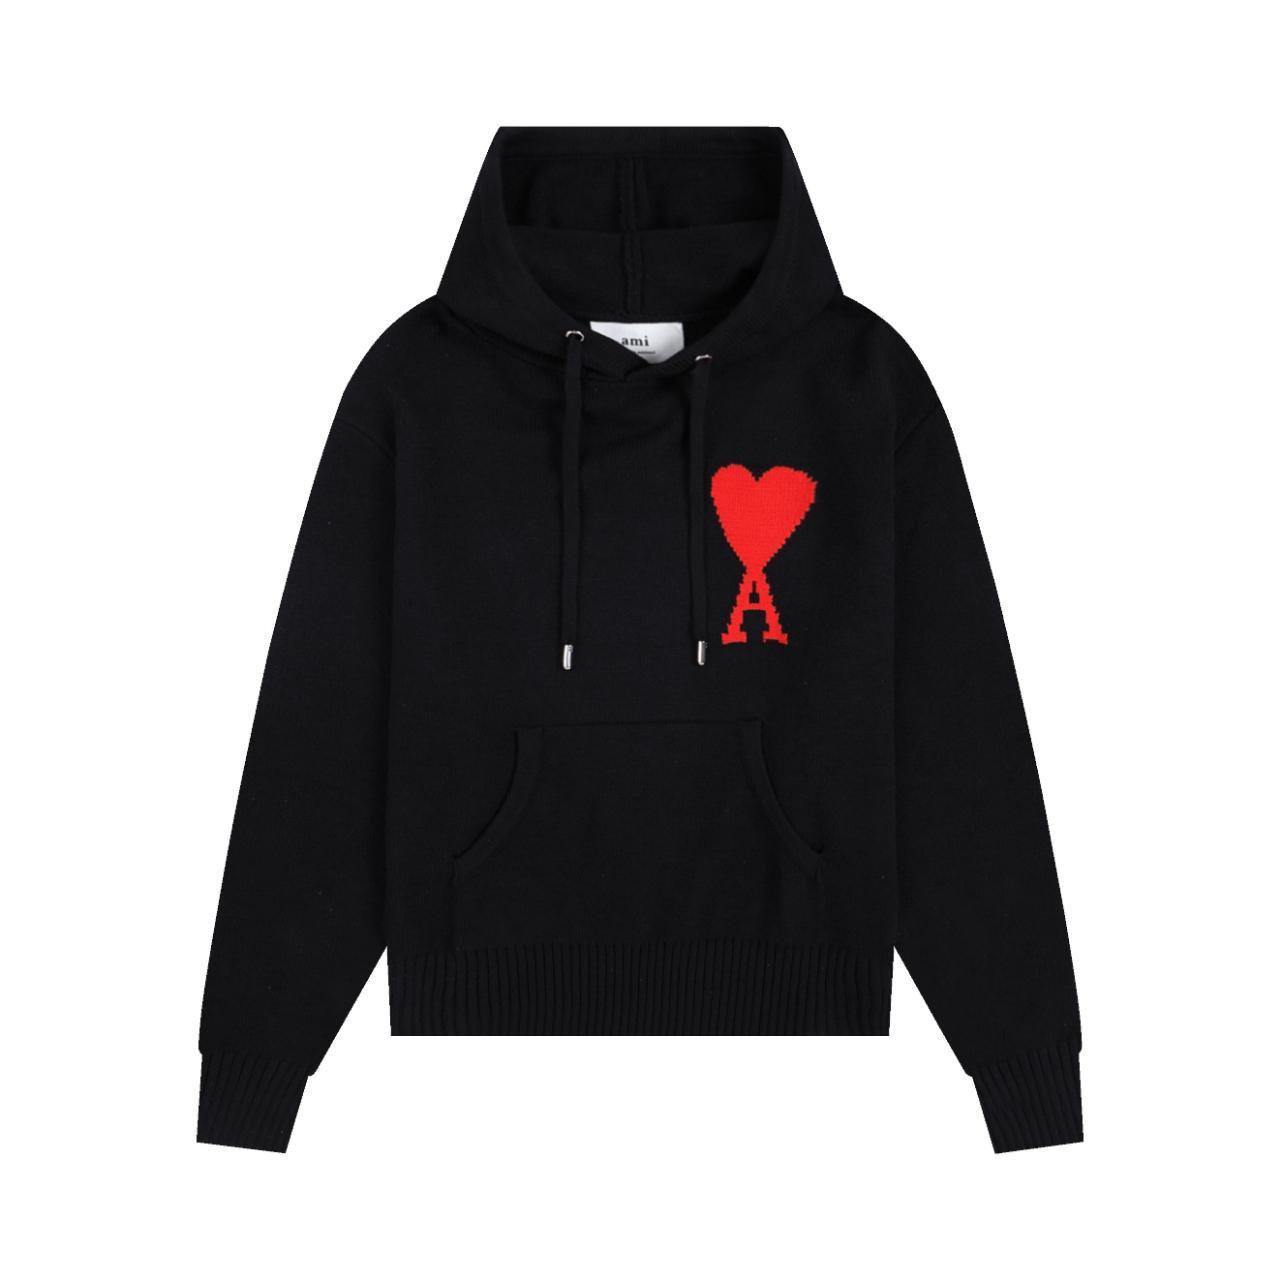 Ami black hooded casual sports sweatshirt Colour:... - Depop